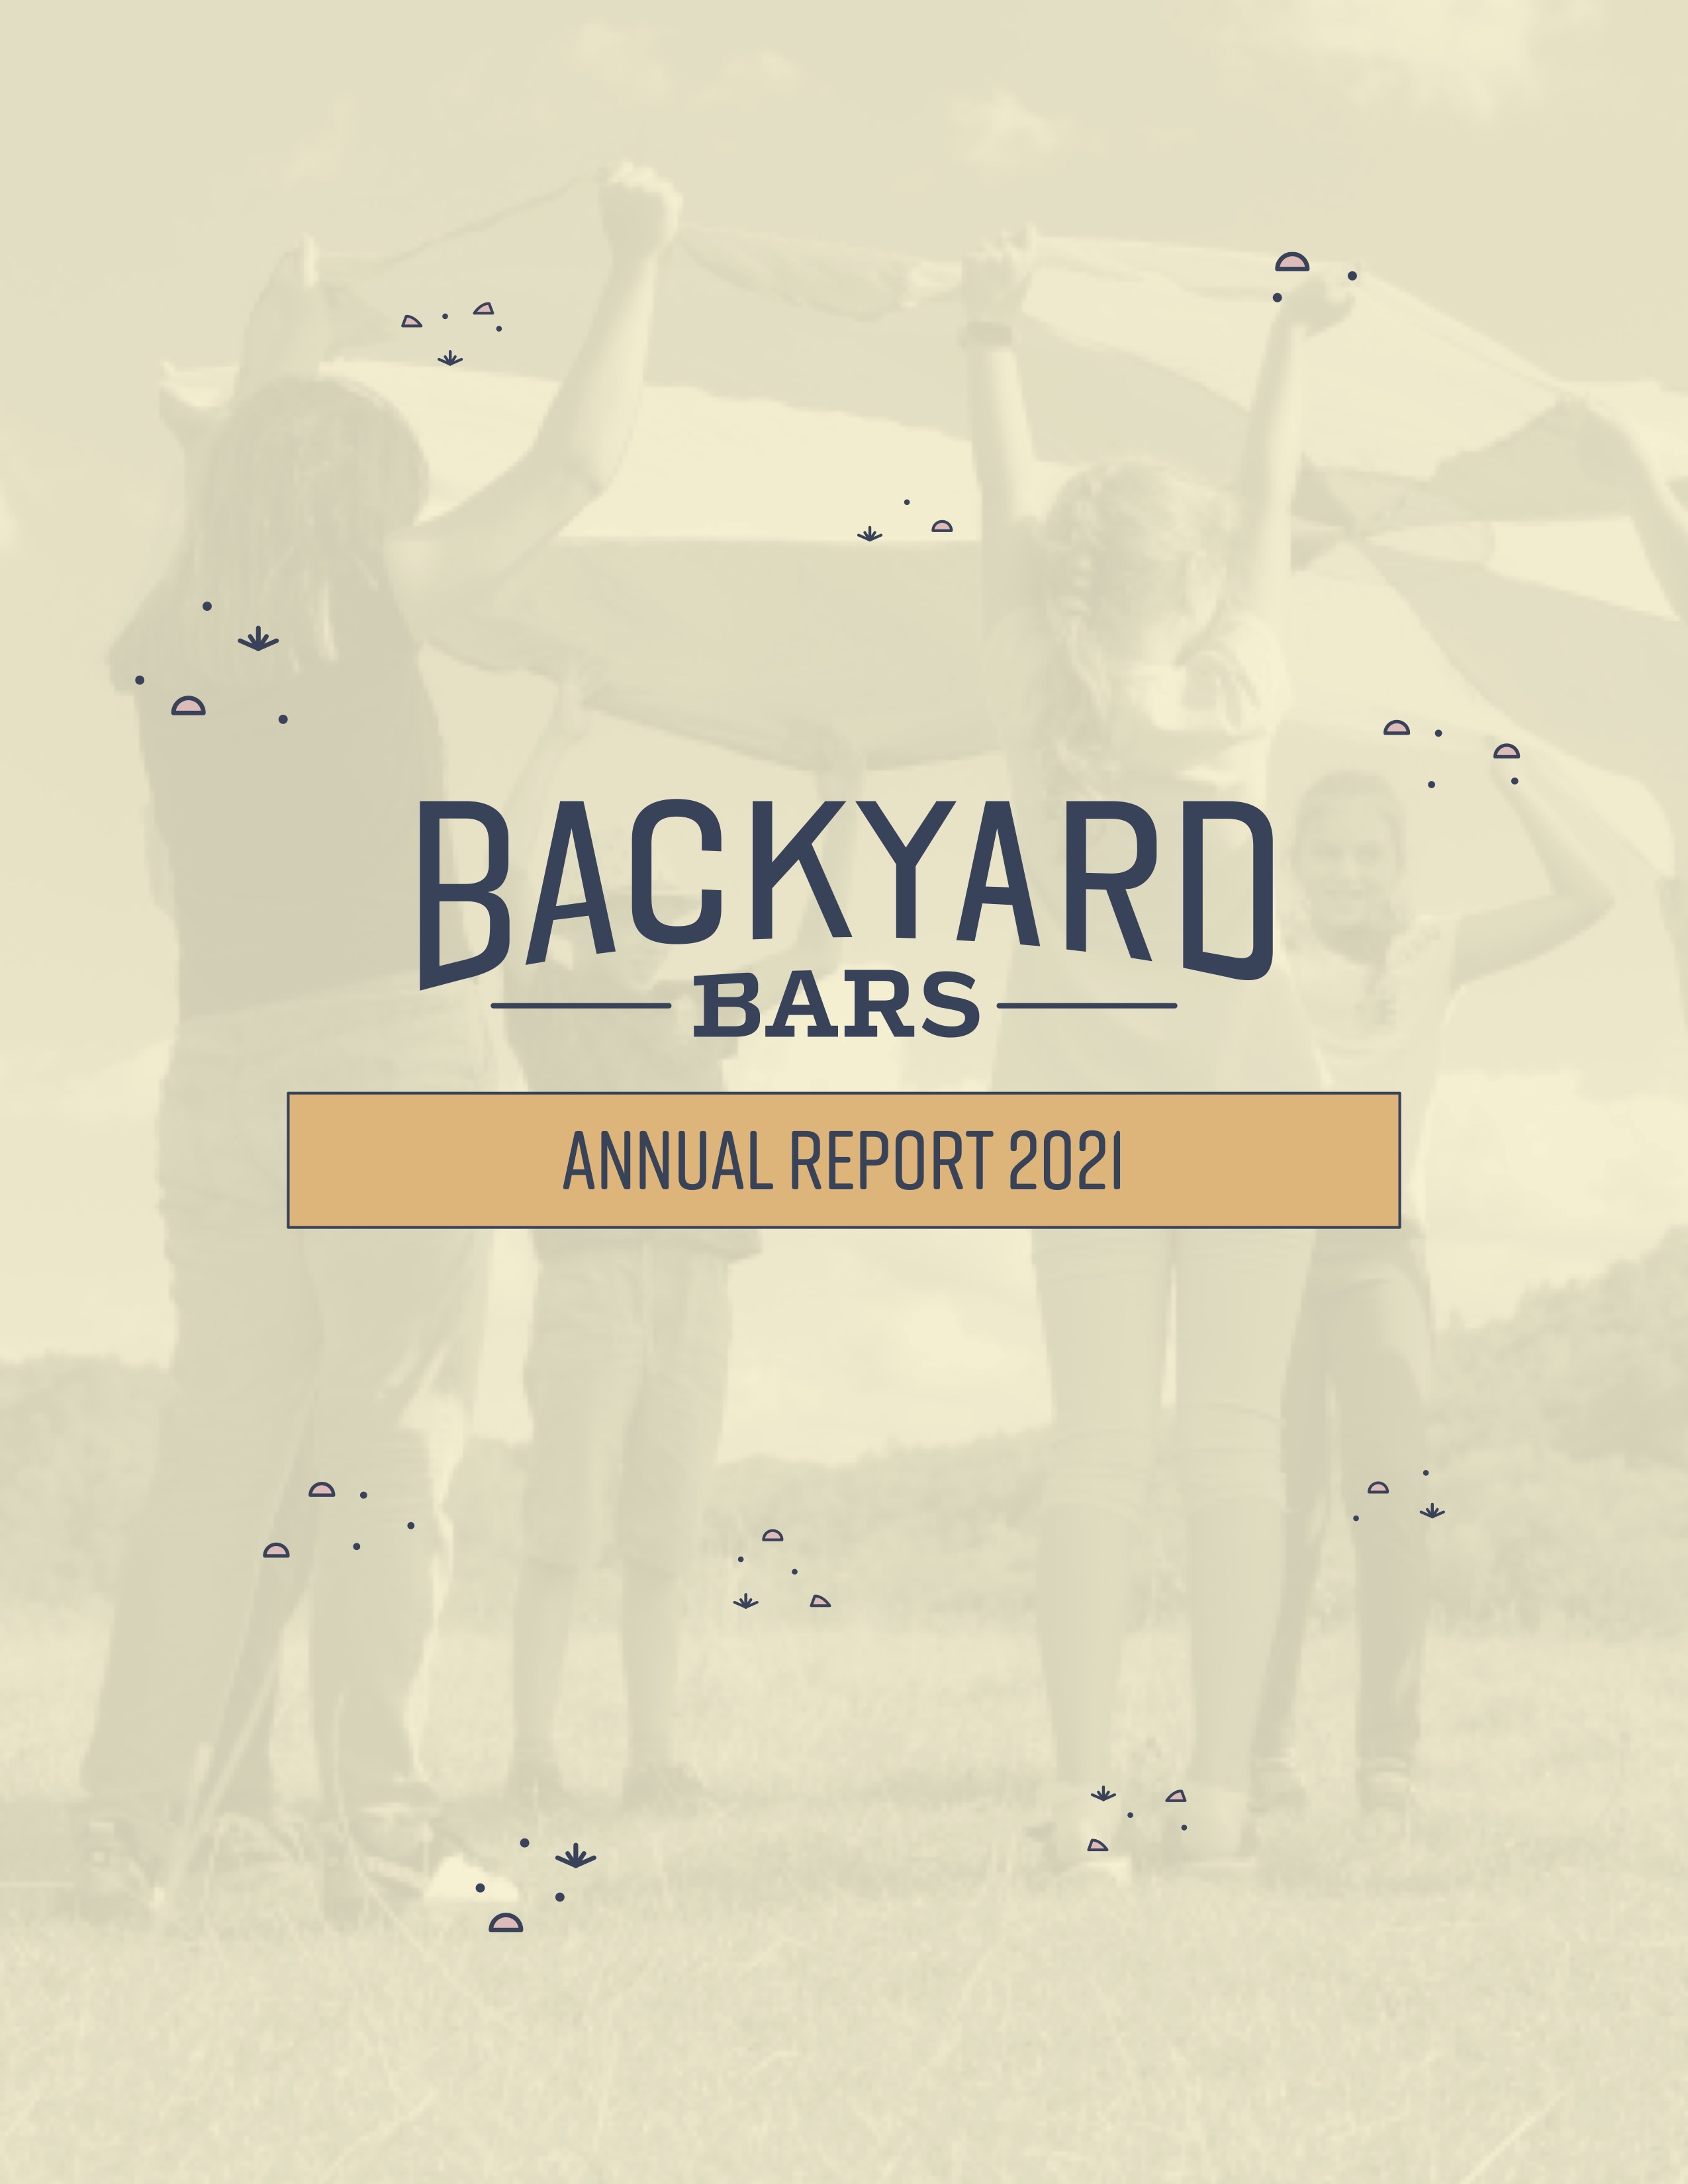 Backyard Bars Annual Report Cover<br>2022<br>Epson Inkjet Print<br>11 x 8.5